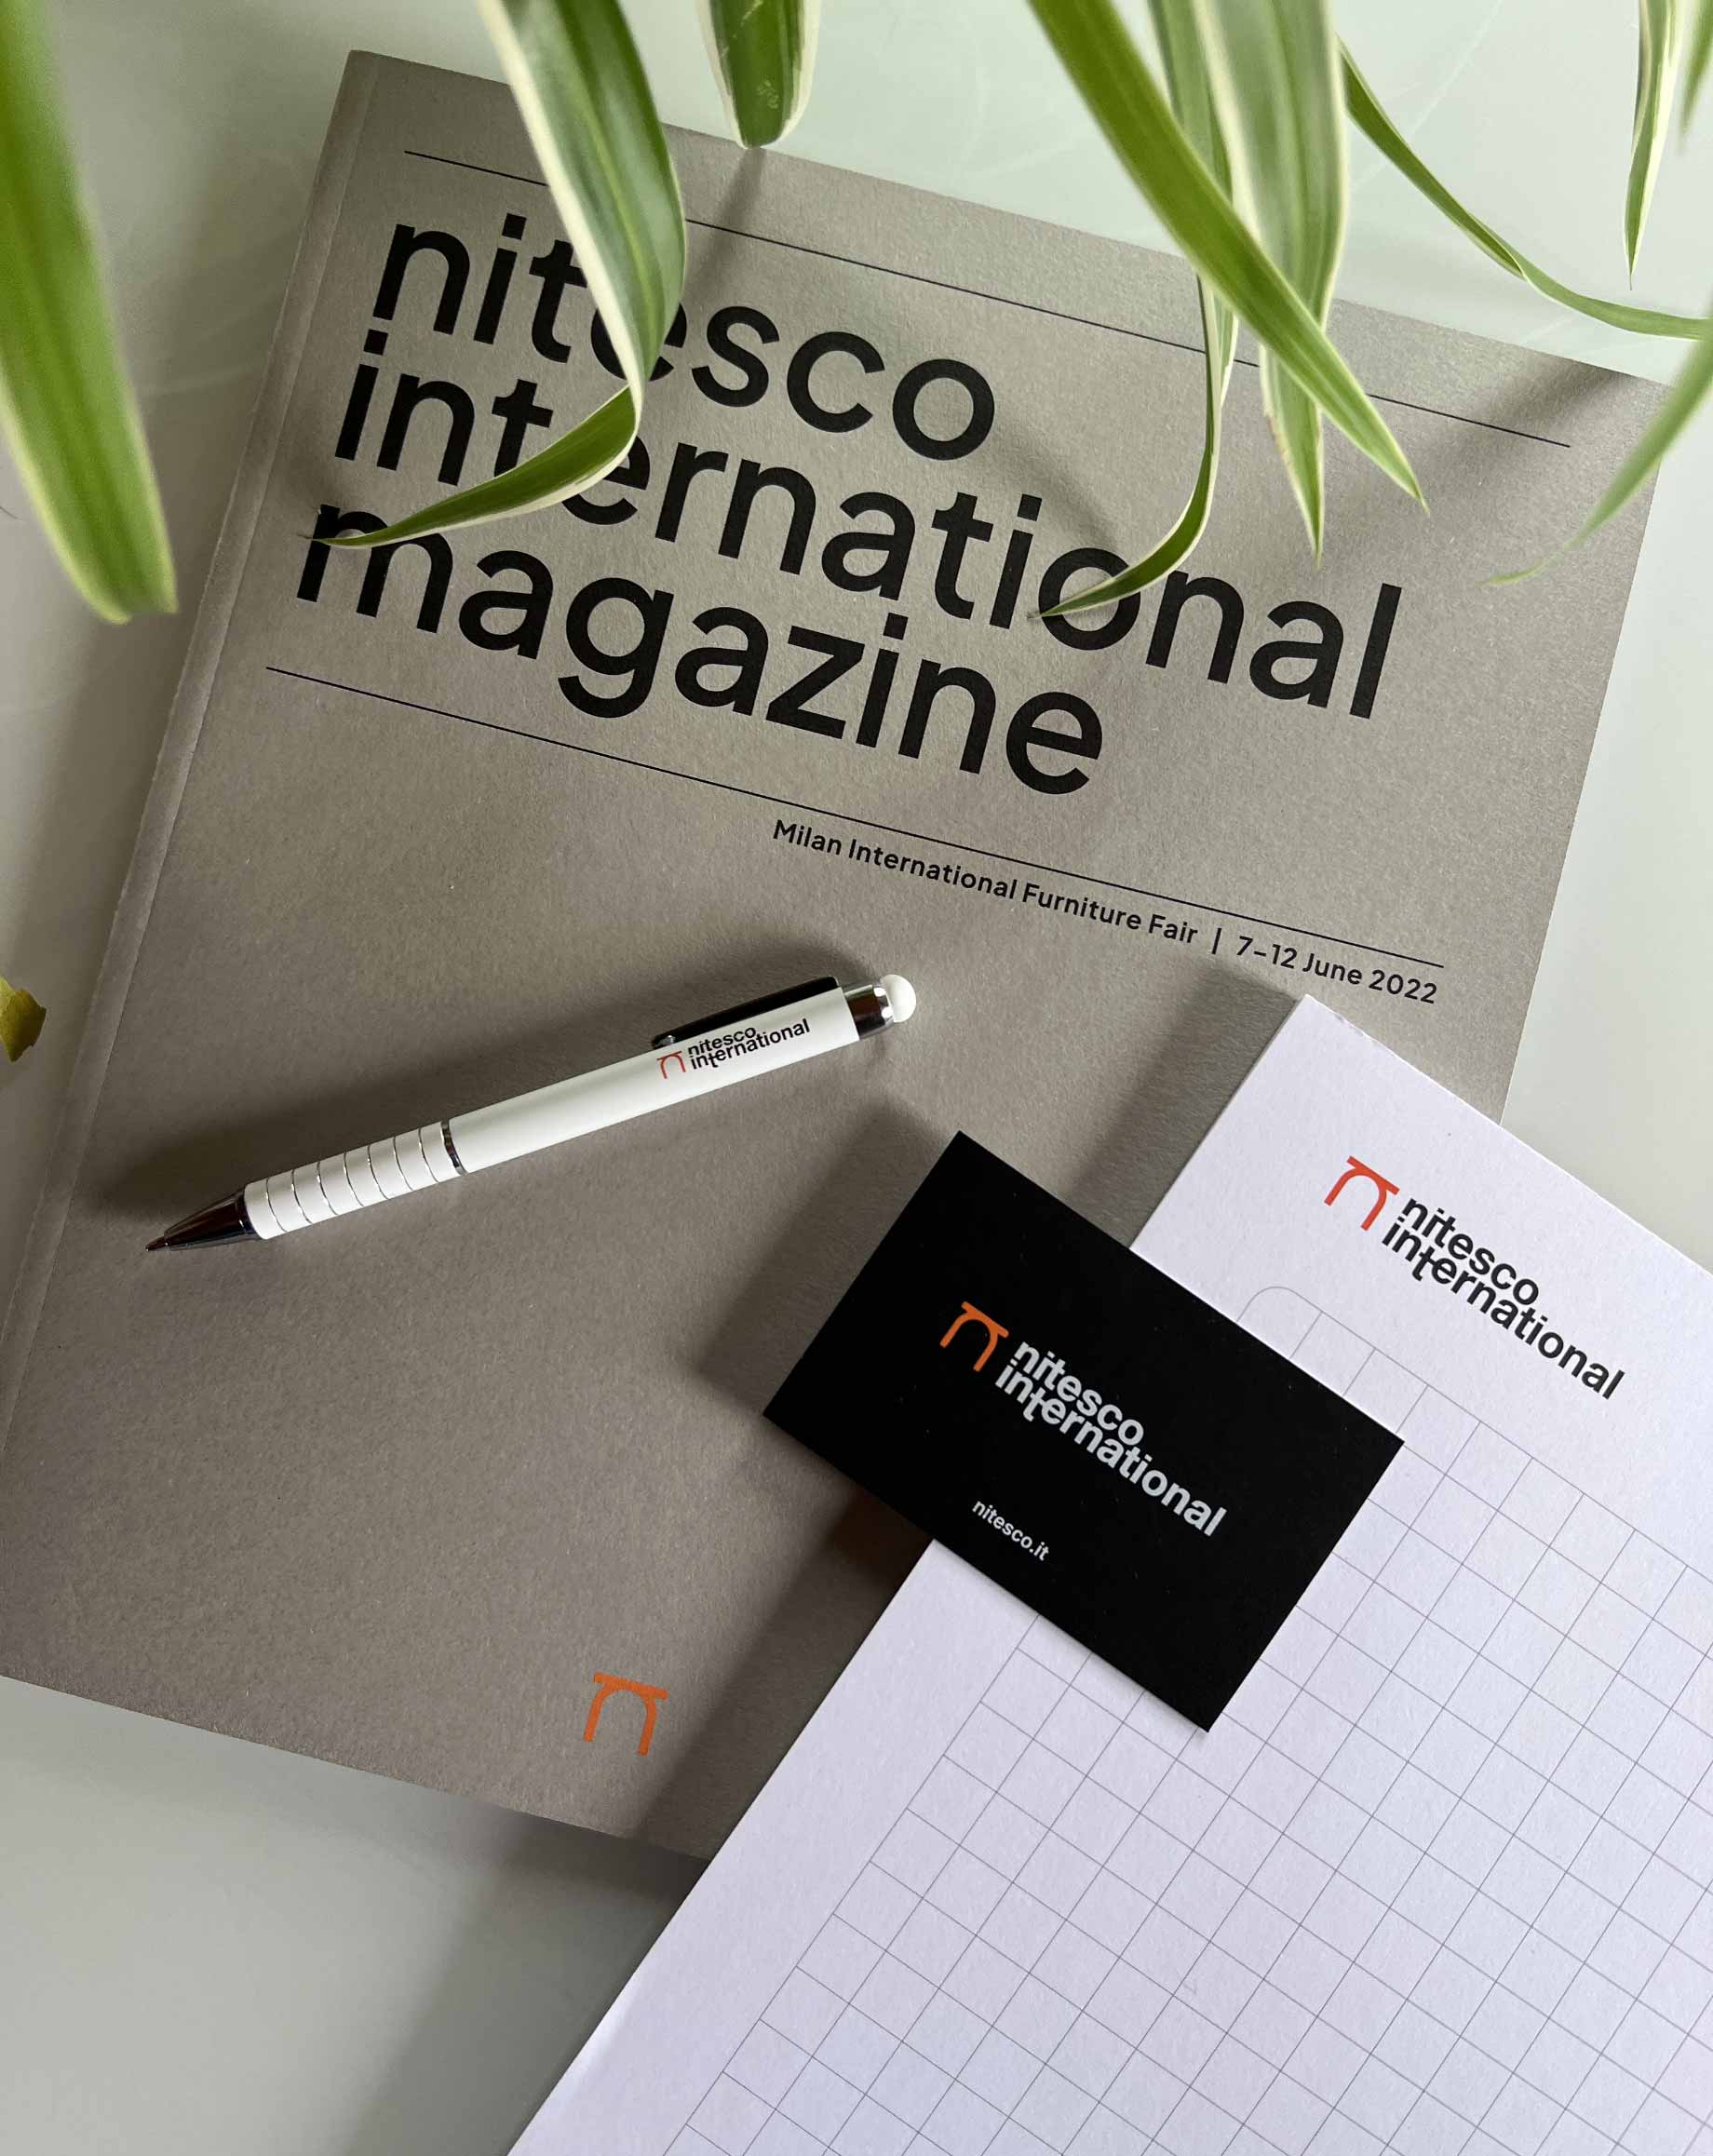 nitesco international magazine